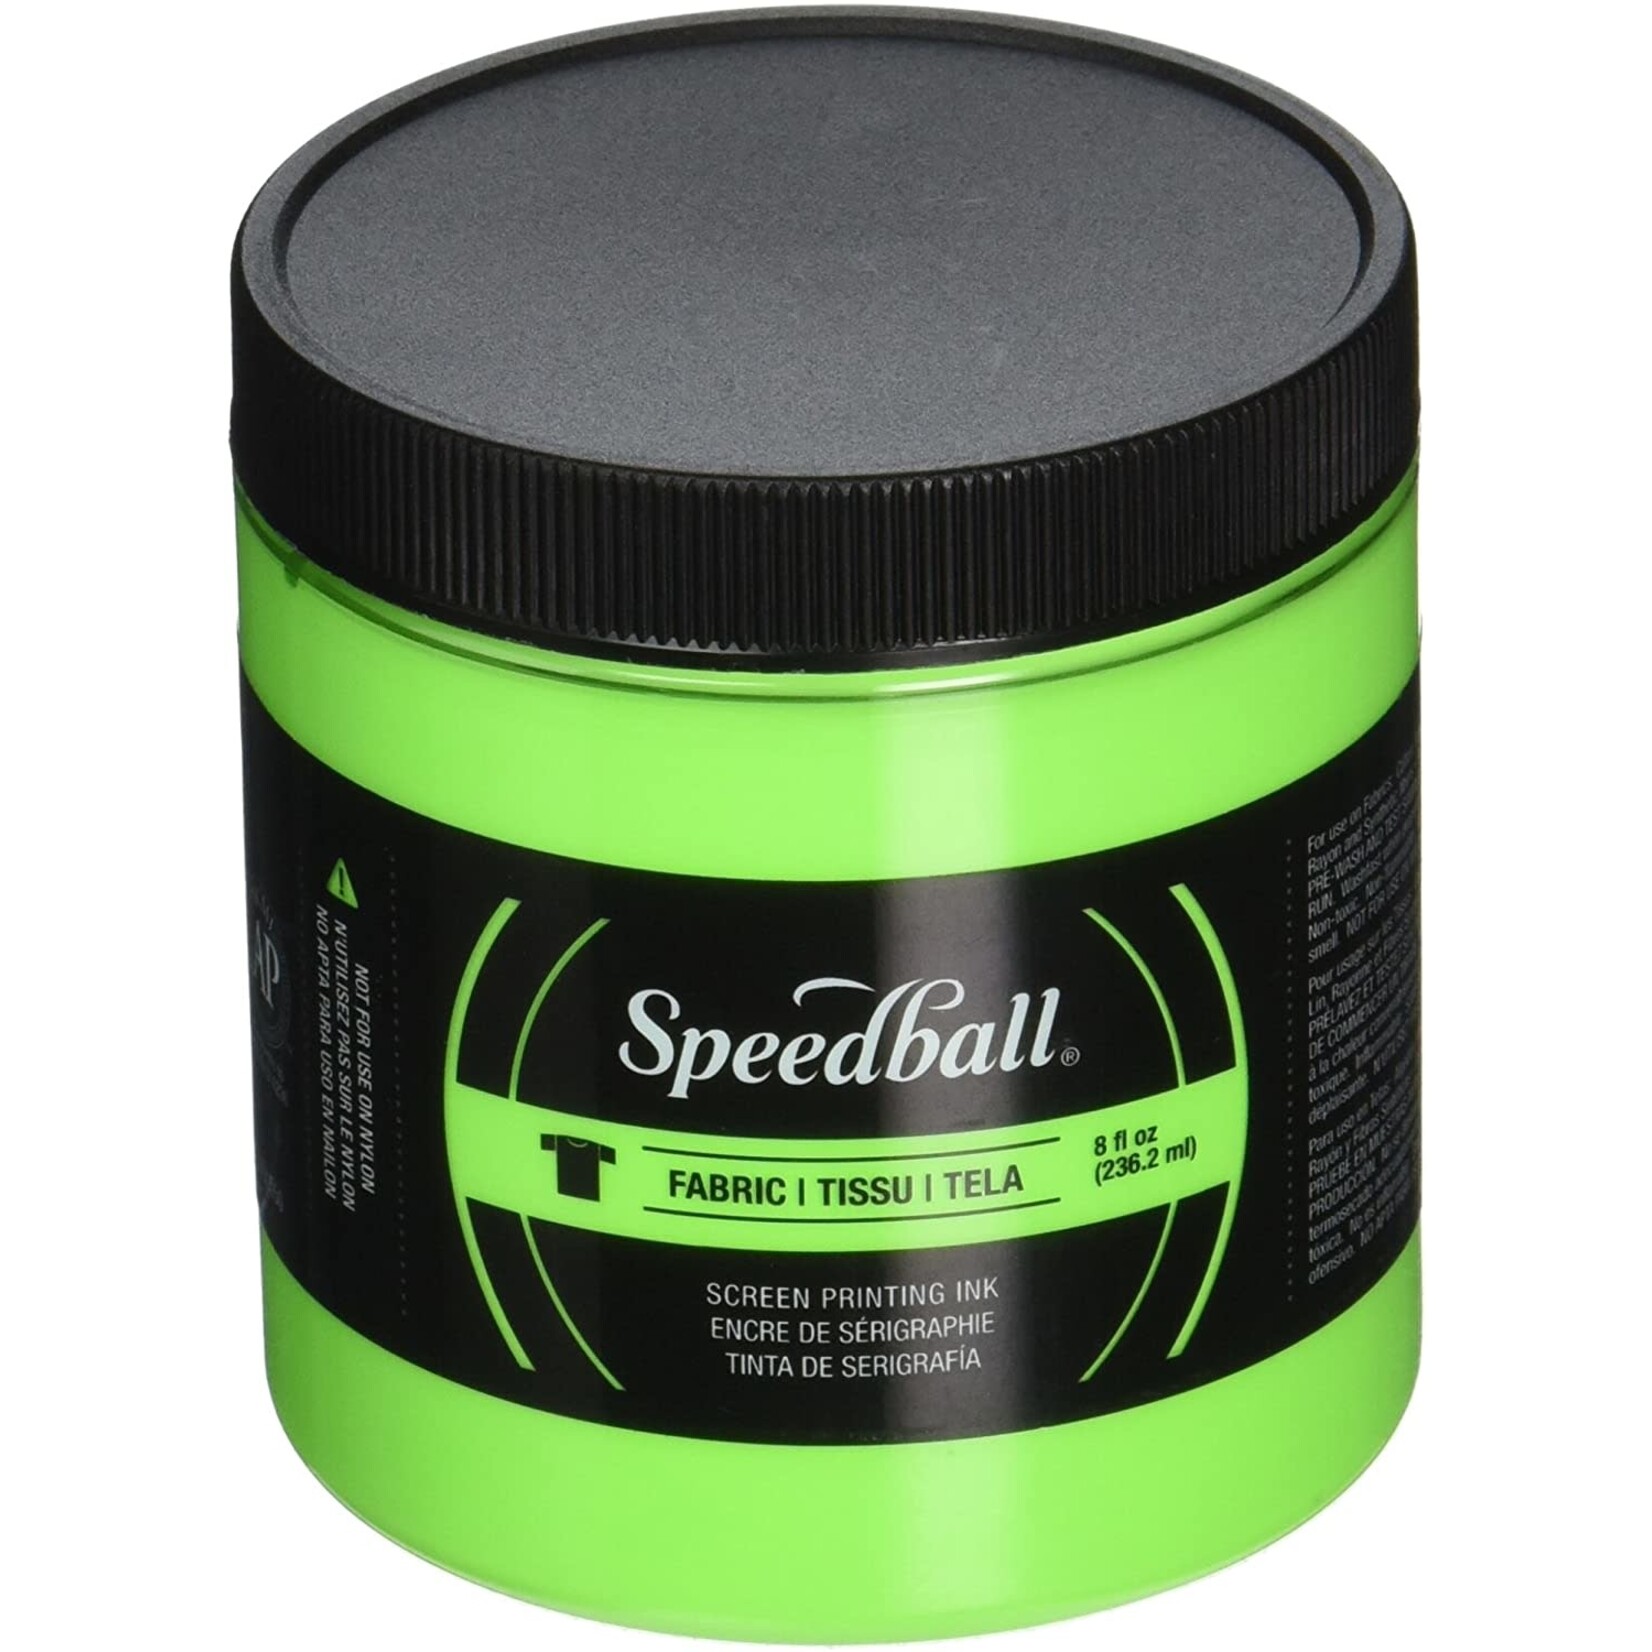 Speedball Fluorescent Screen Printing Ink Lime Green 8oz